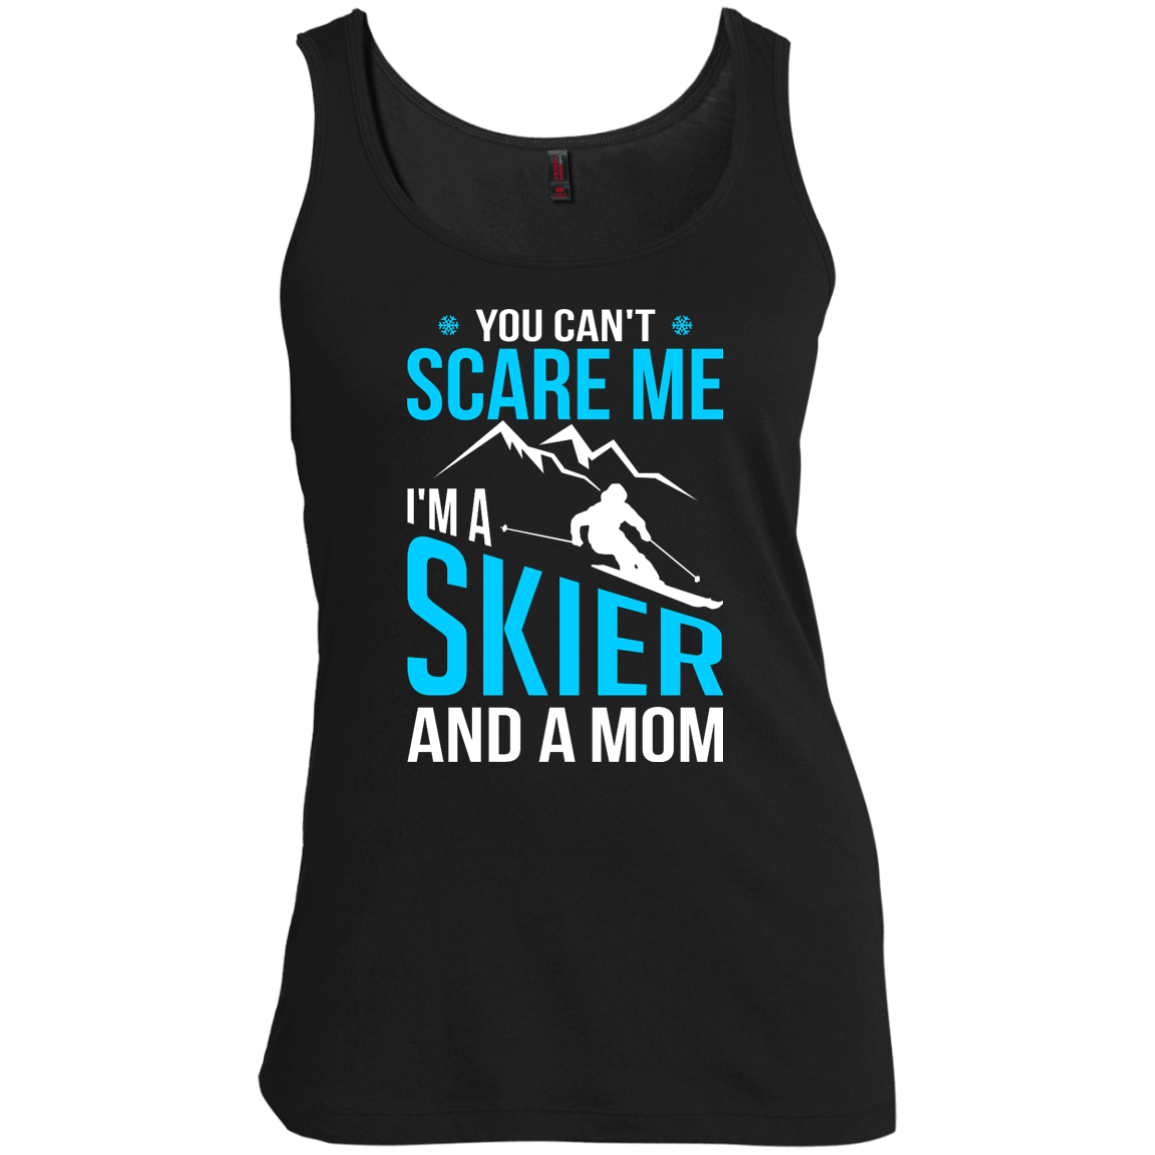 You Can't Scare Me, I'm A Skier And A Mom Tank Tops - Powderaddicts